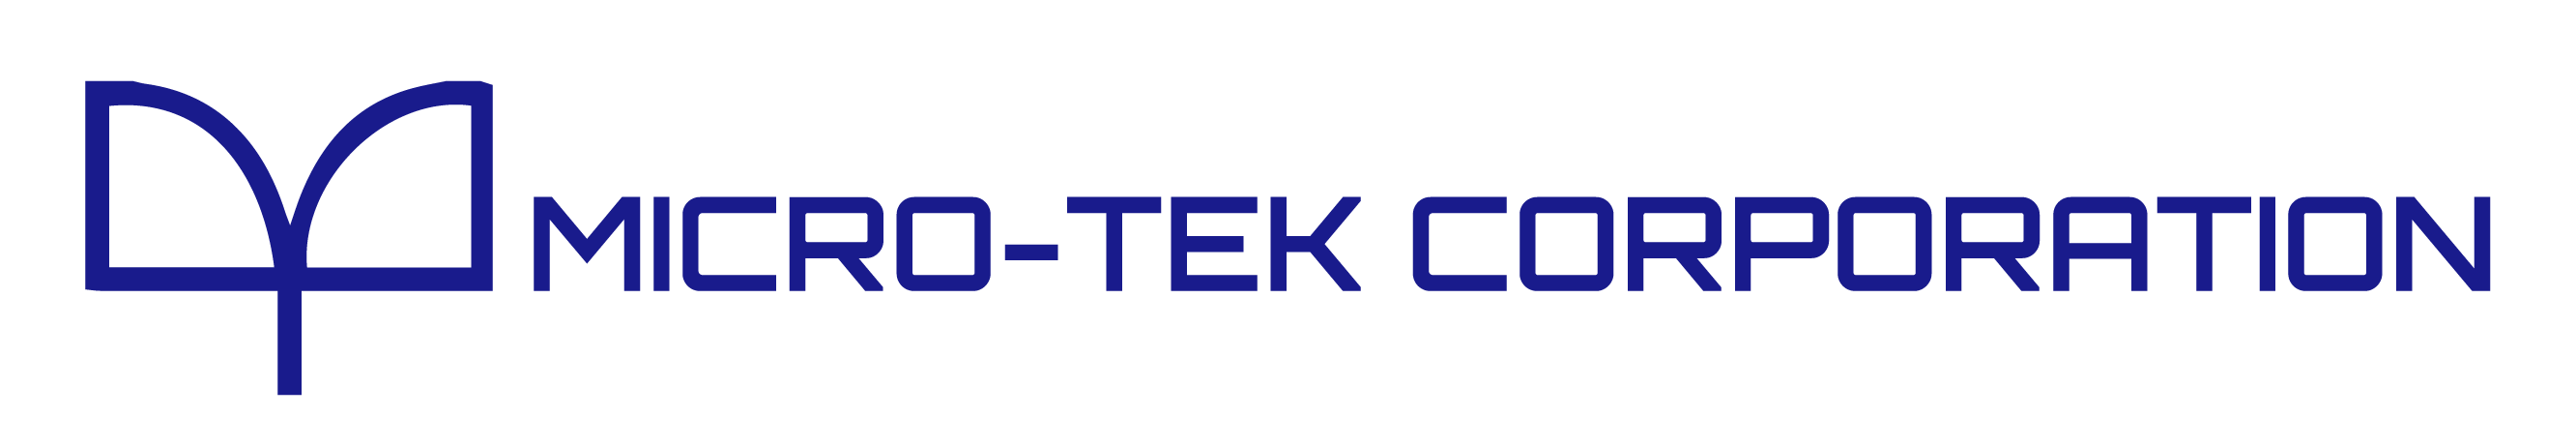 Micro-Tek Corporation